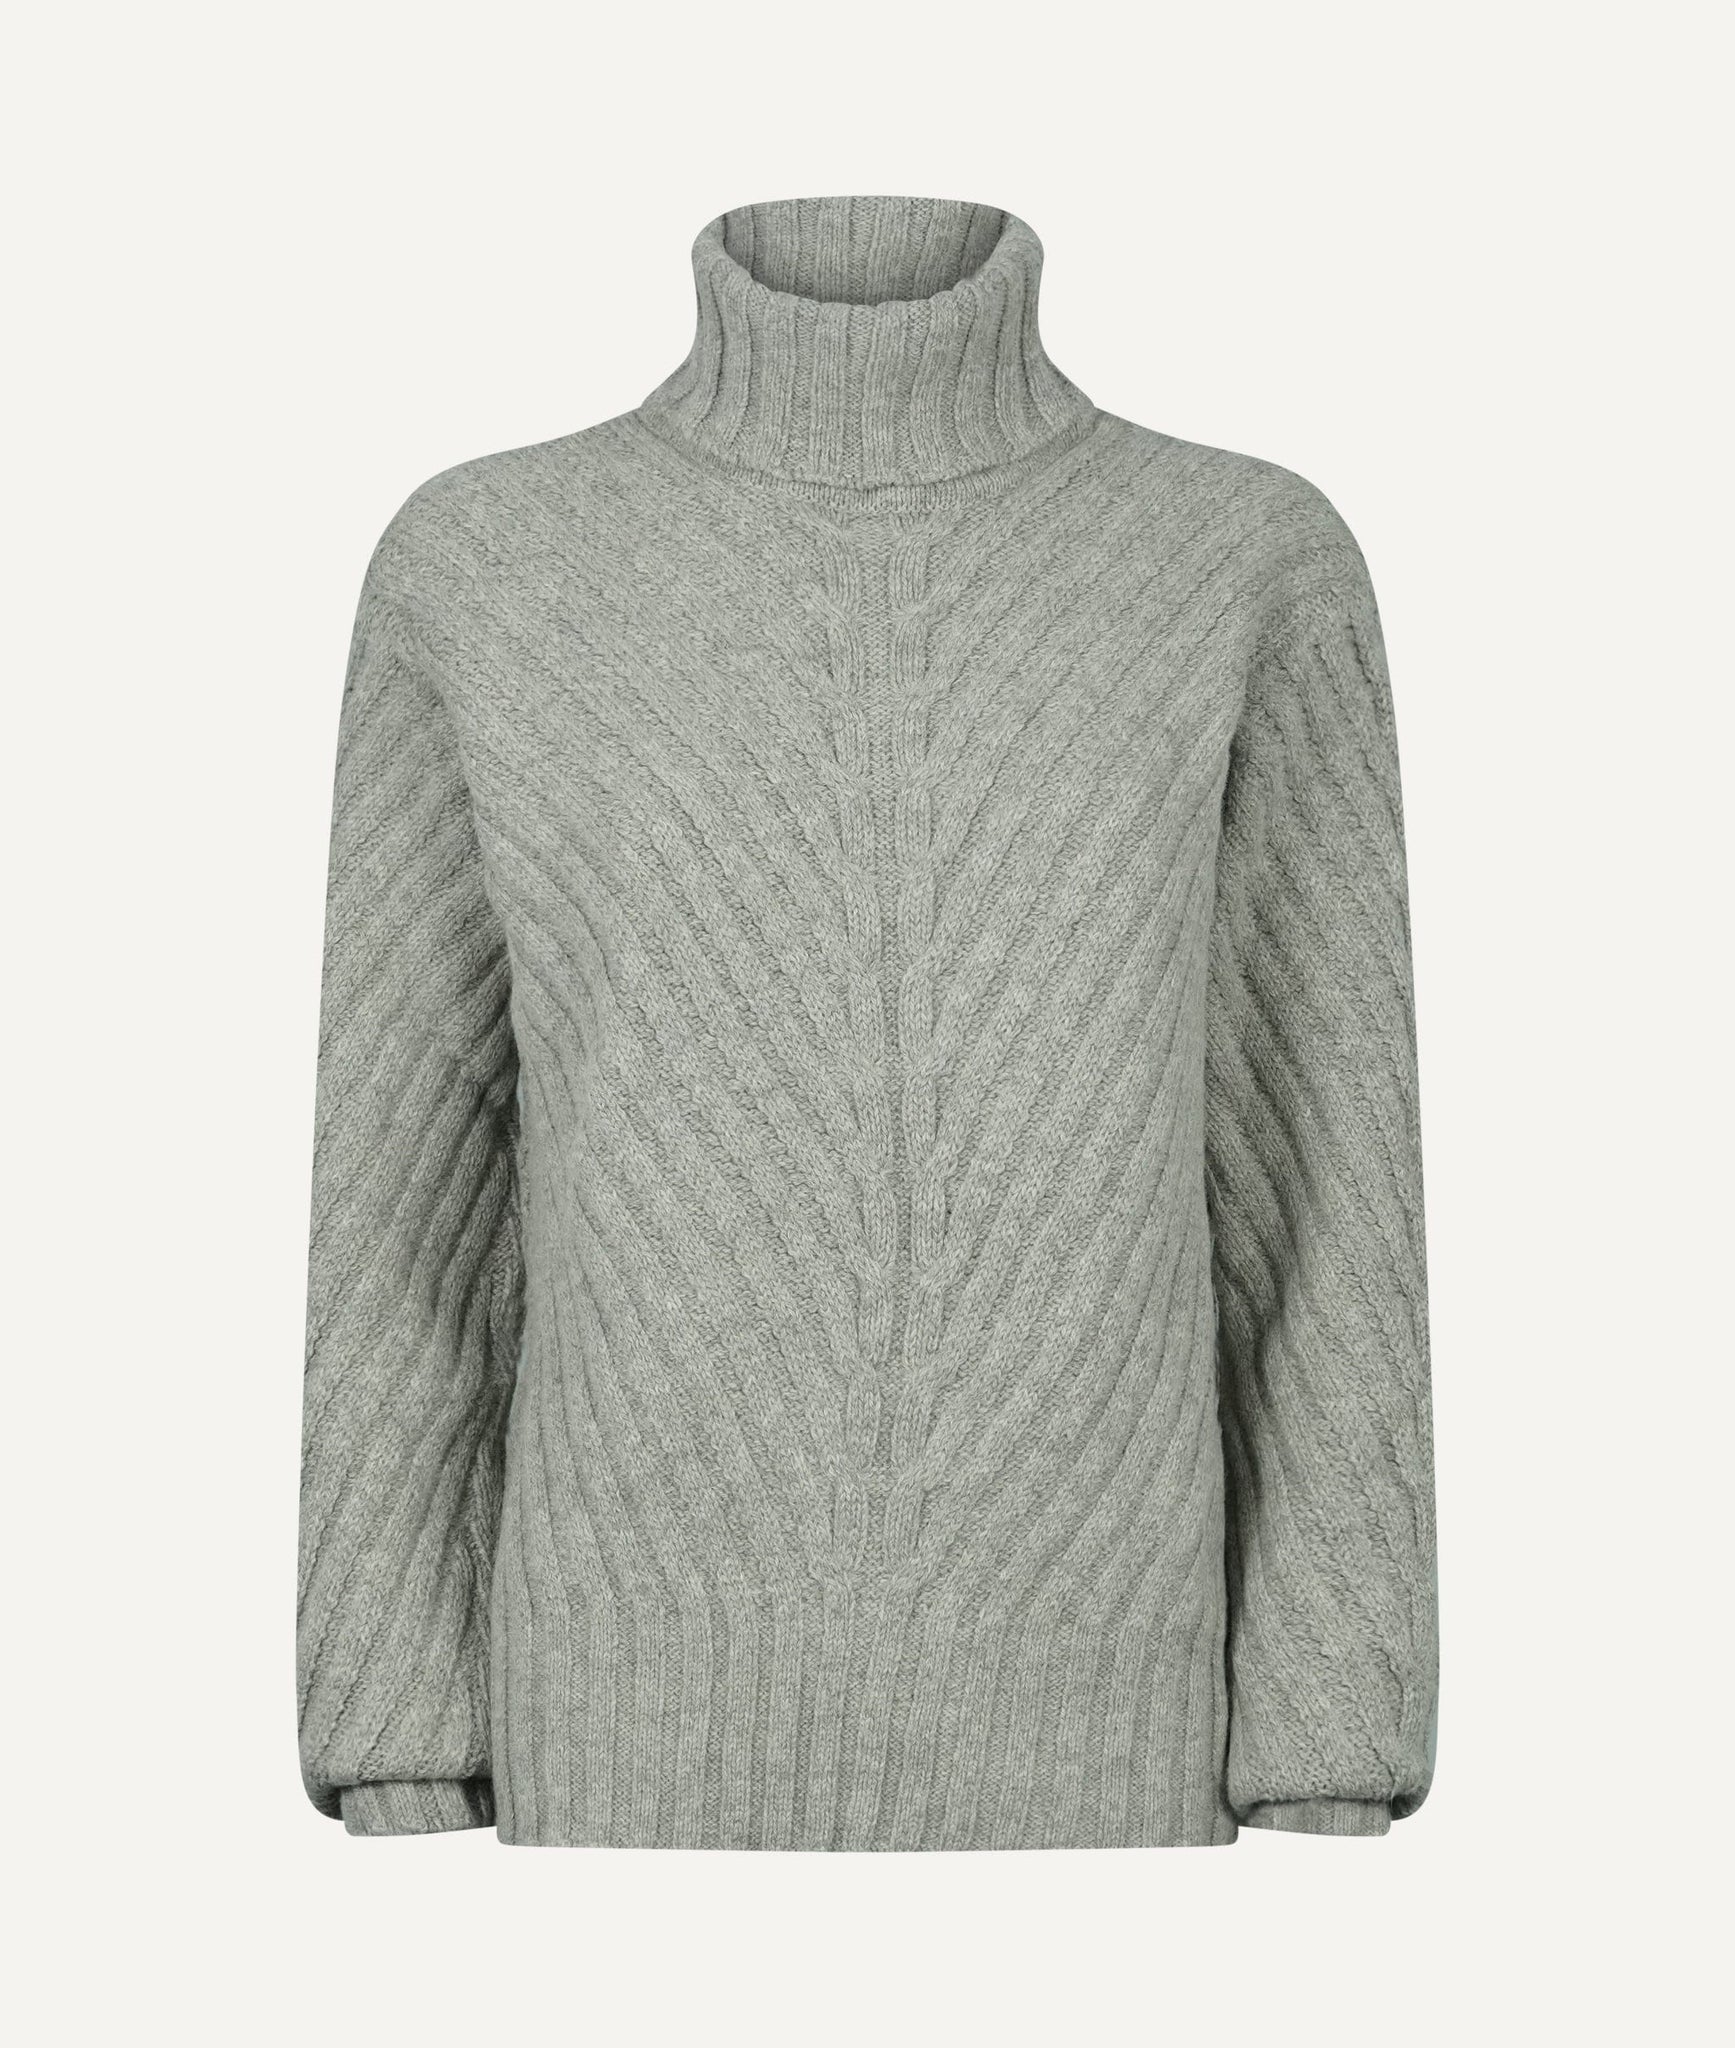 Eleventy - Sweater in Alpaca & Polyammide